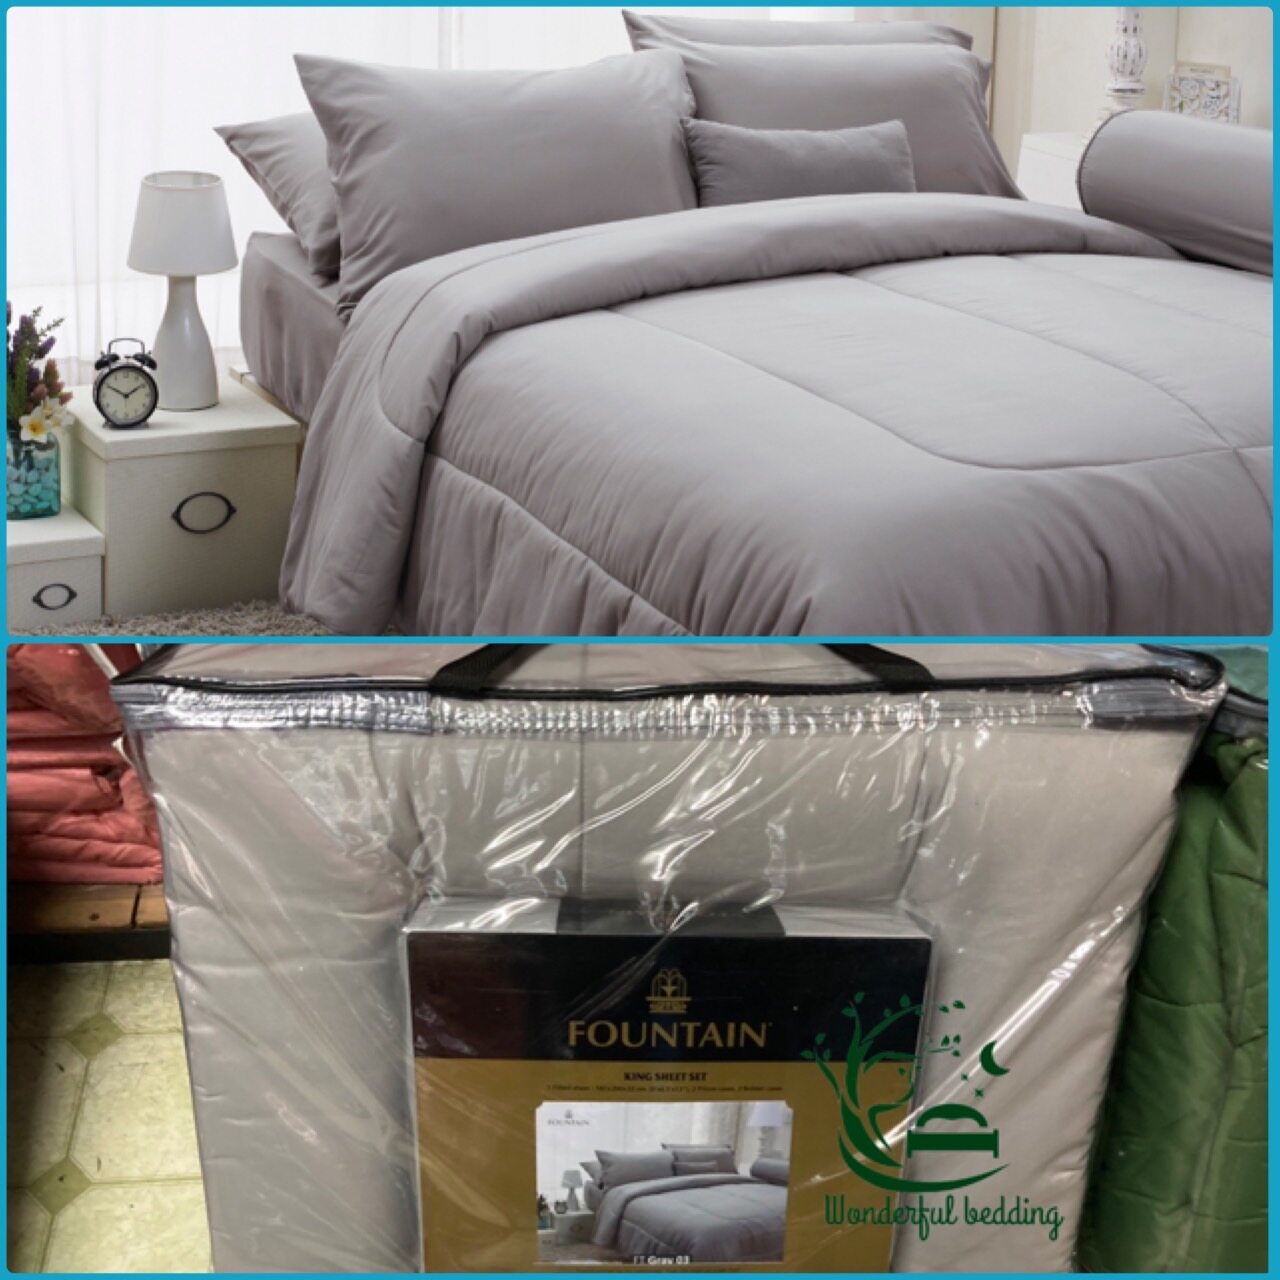 FOUNTAIN ชุดผ้าปู (ไม่มีผ้านวม) ผ้าปู ที่นอน แท้ 100% FTC สีพื้น เขียว Green Gray เทา ขนาด 3.5 5 6ฟุต ชุดเครื่องนอน ผ้านวม ผ้าปูที่นอน wonderful bedding  variation3 Gray3ขนาดสินค้า 5 ฟุต